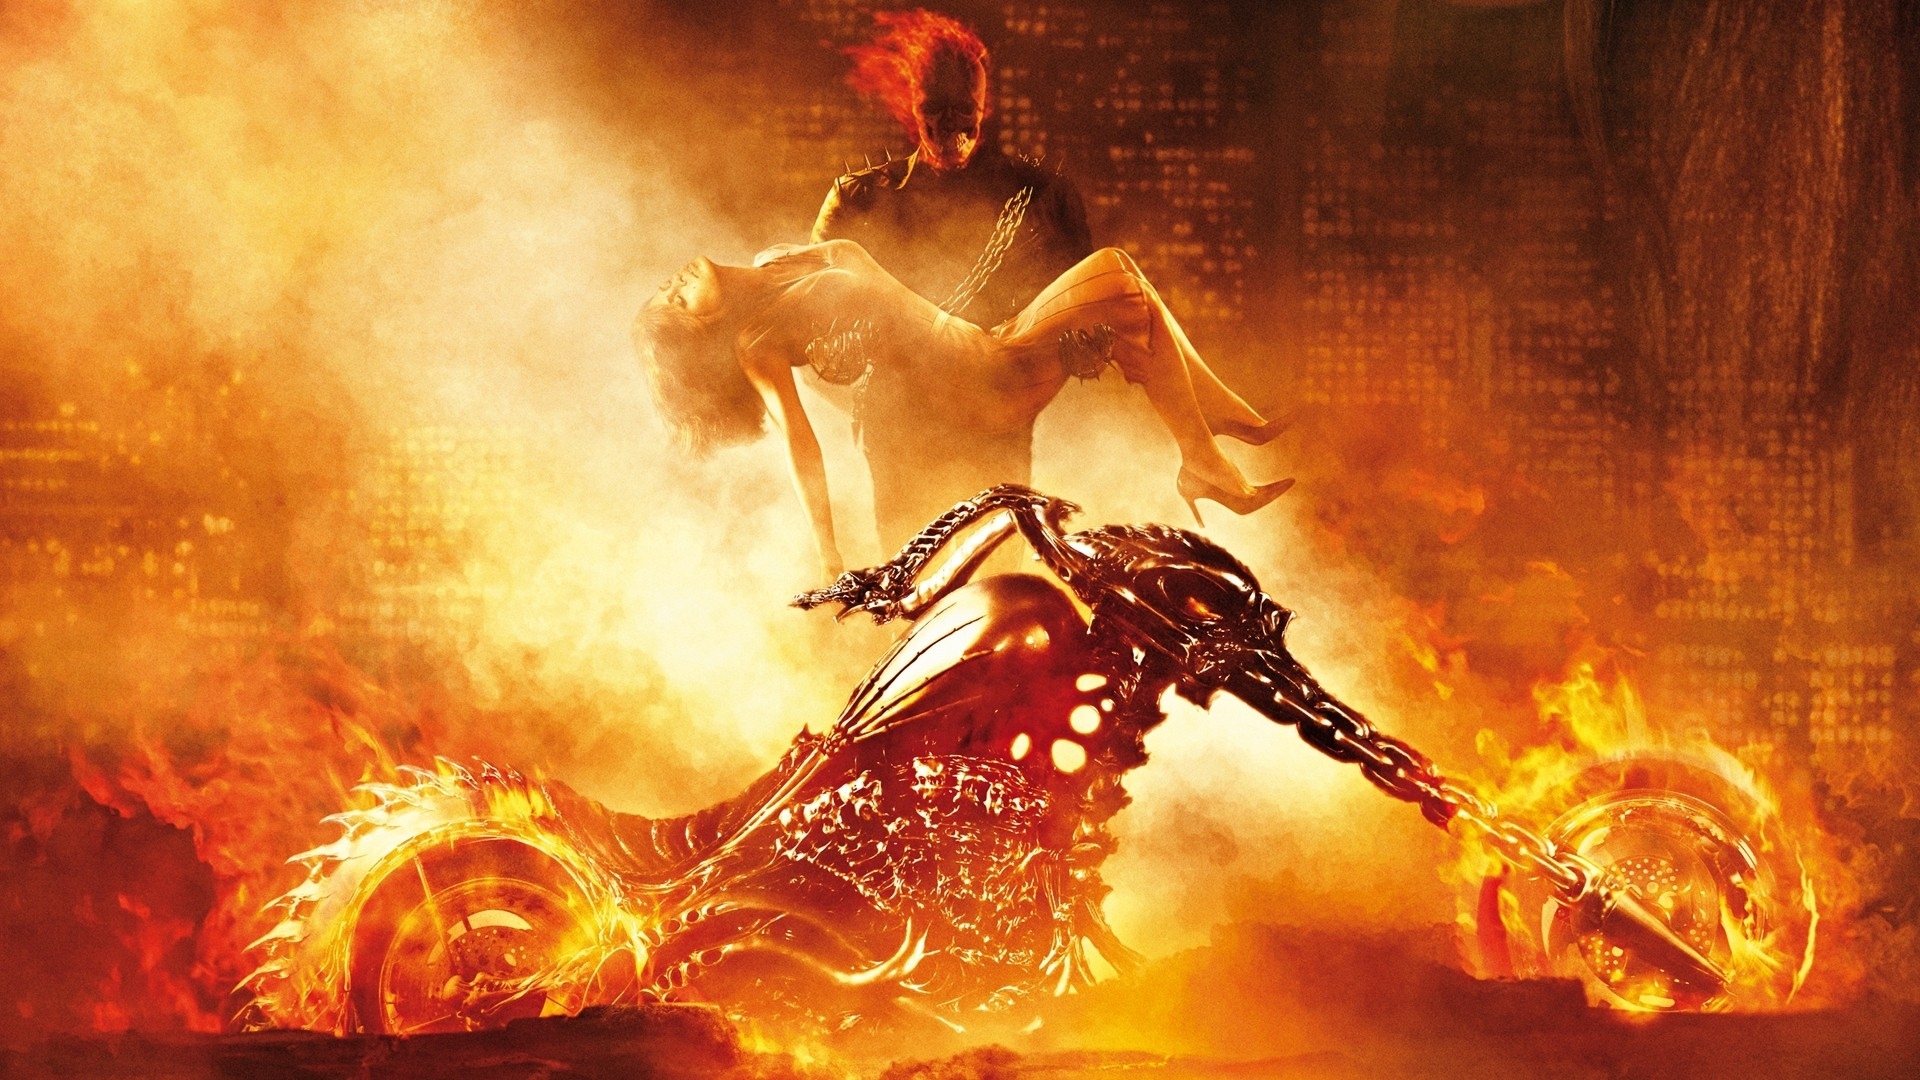 Ghost Rider Dark Ics Games Evil Fire Love Romance Chopper